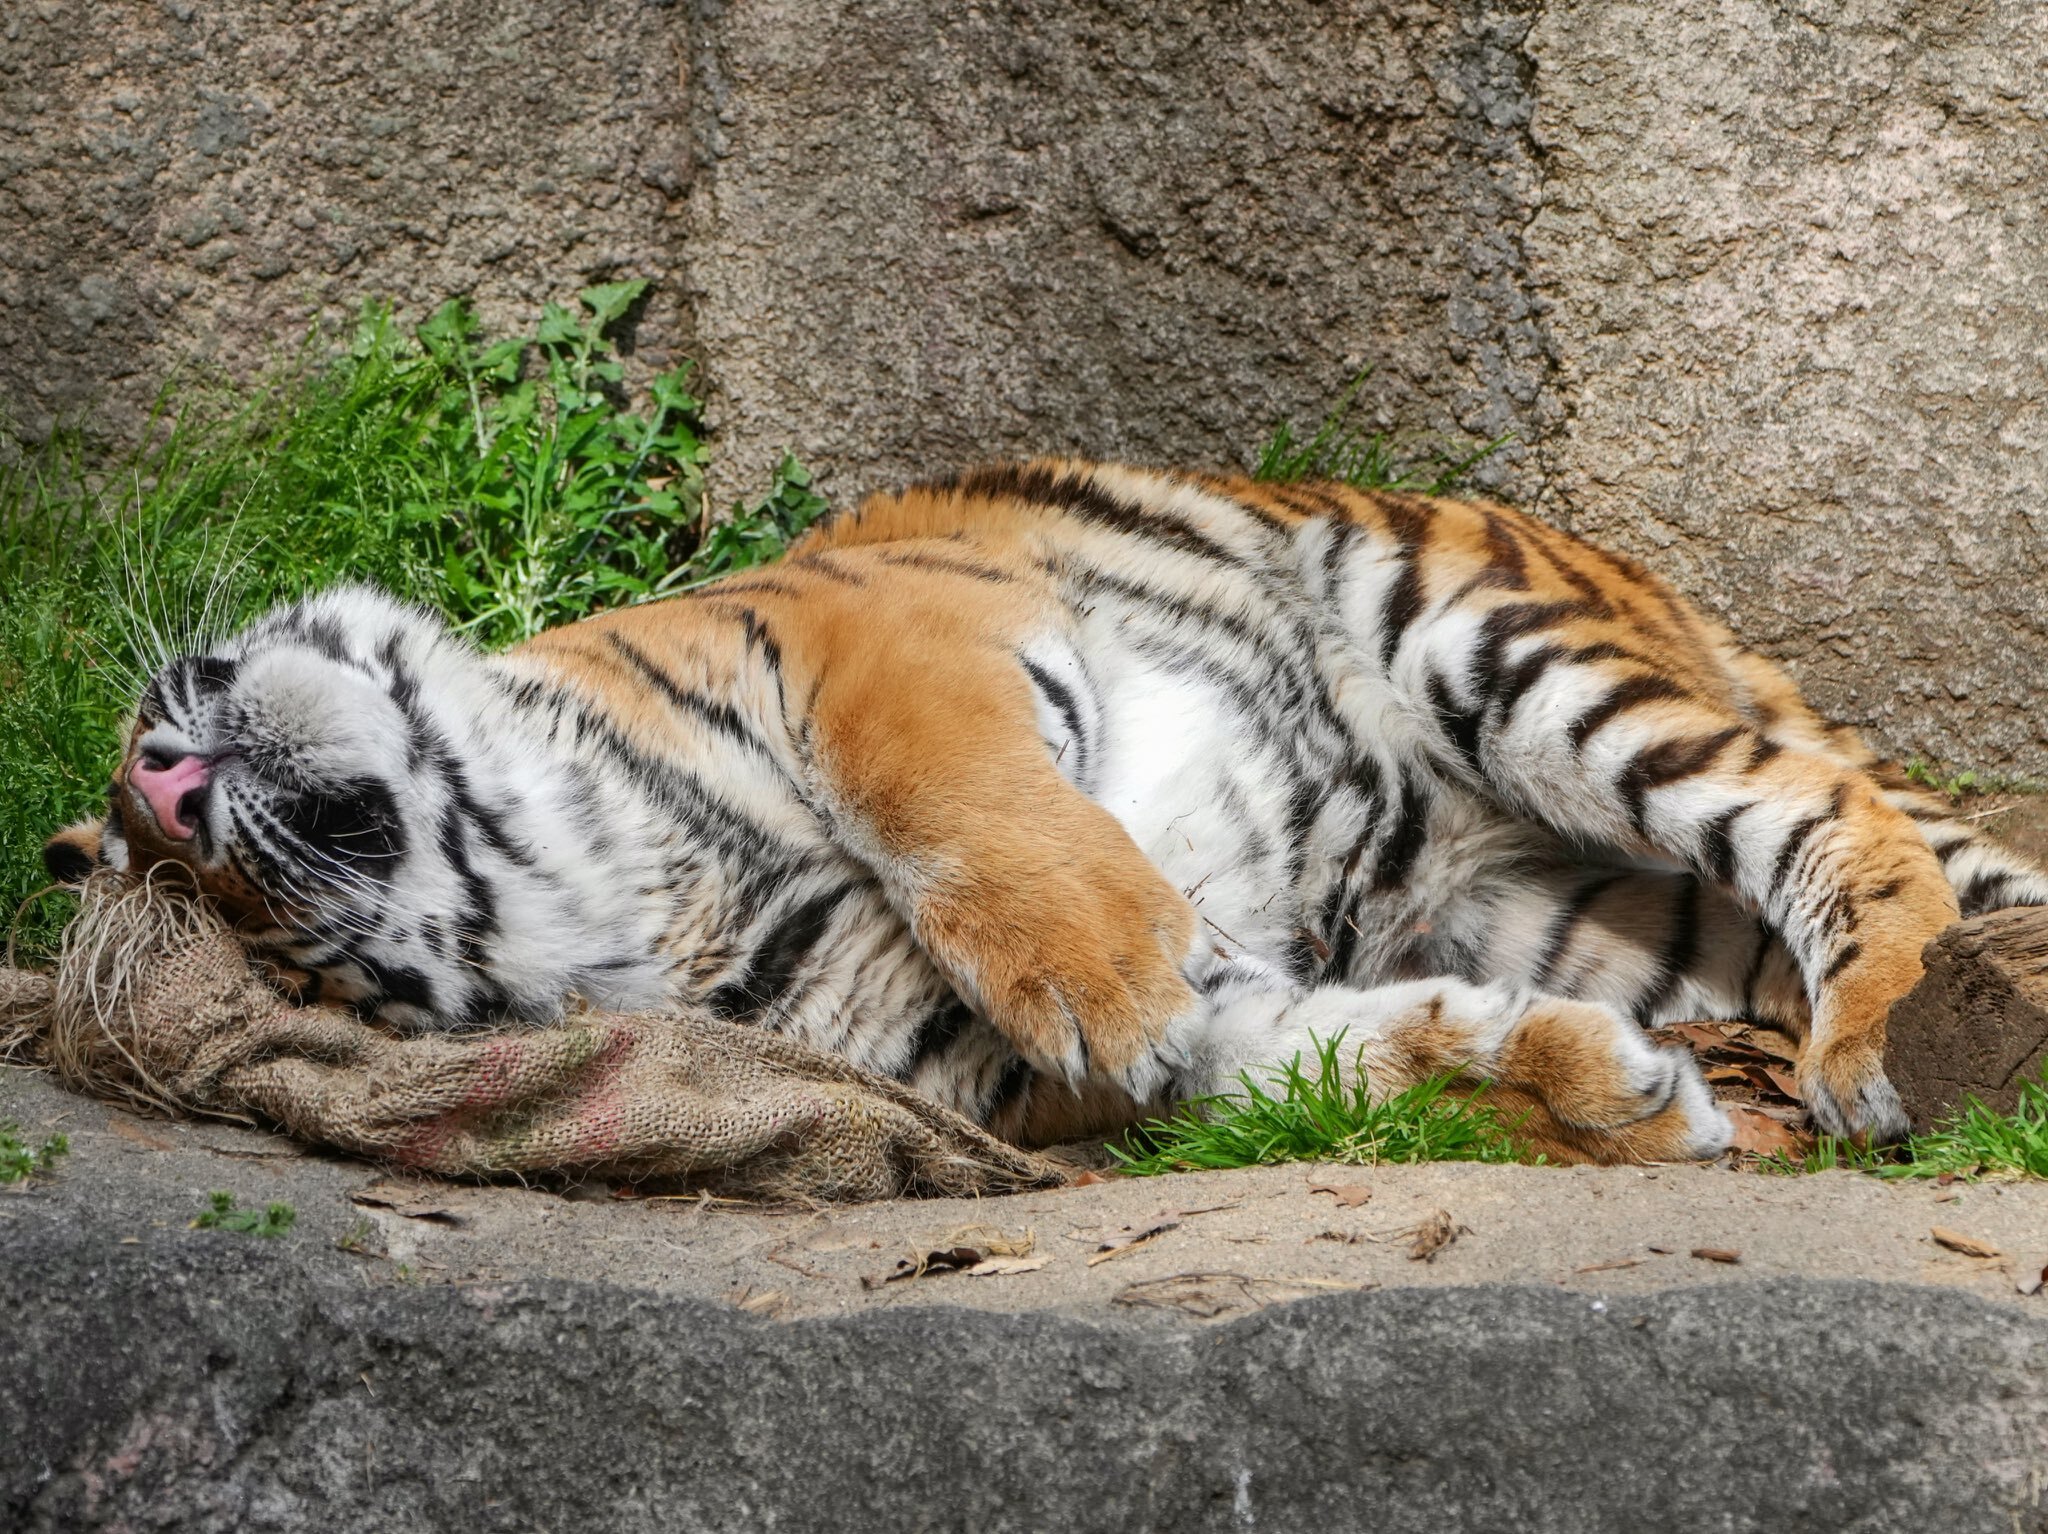 The cat is tired) - Tiger, Amur tiger, Tiger cubs, Big cats, Cat family, Wild animals, Predatory animals, Zoo, Shizuoka, Honshu, Japan, Positive, Longpost, Yawn, 